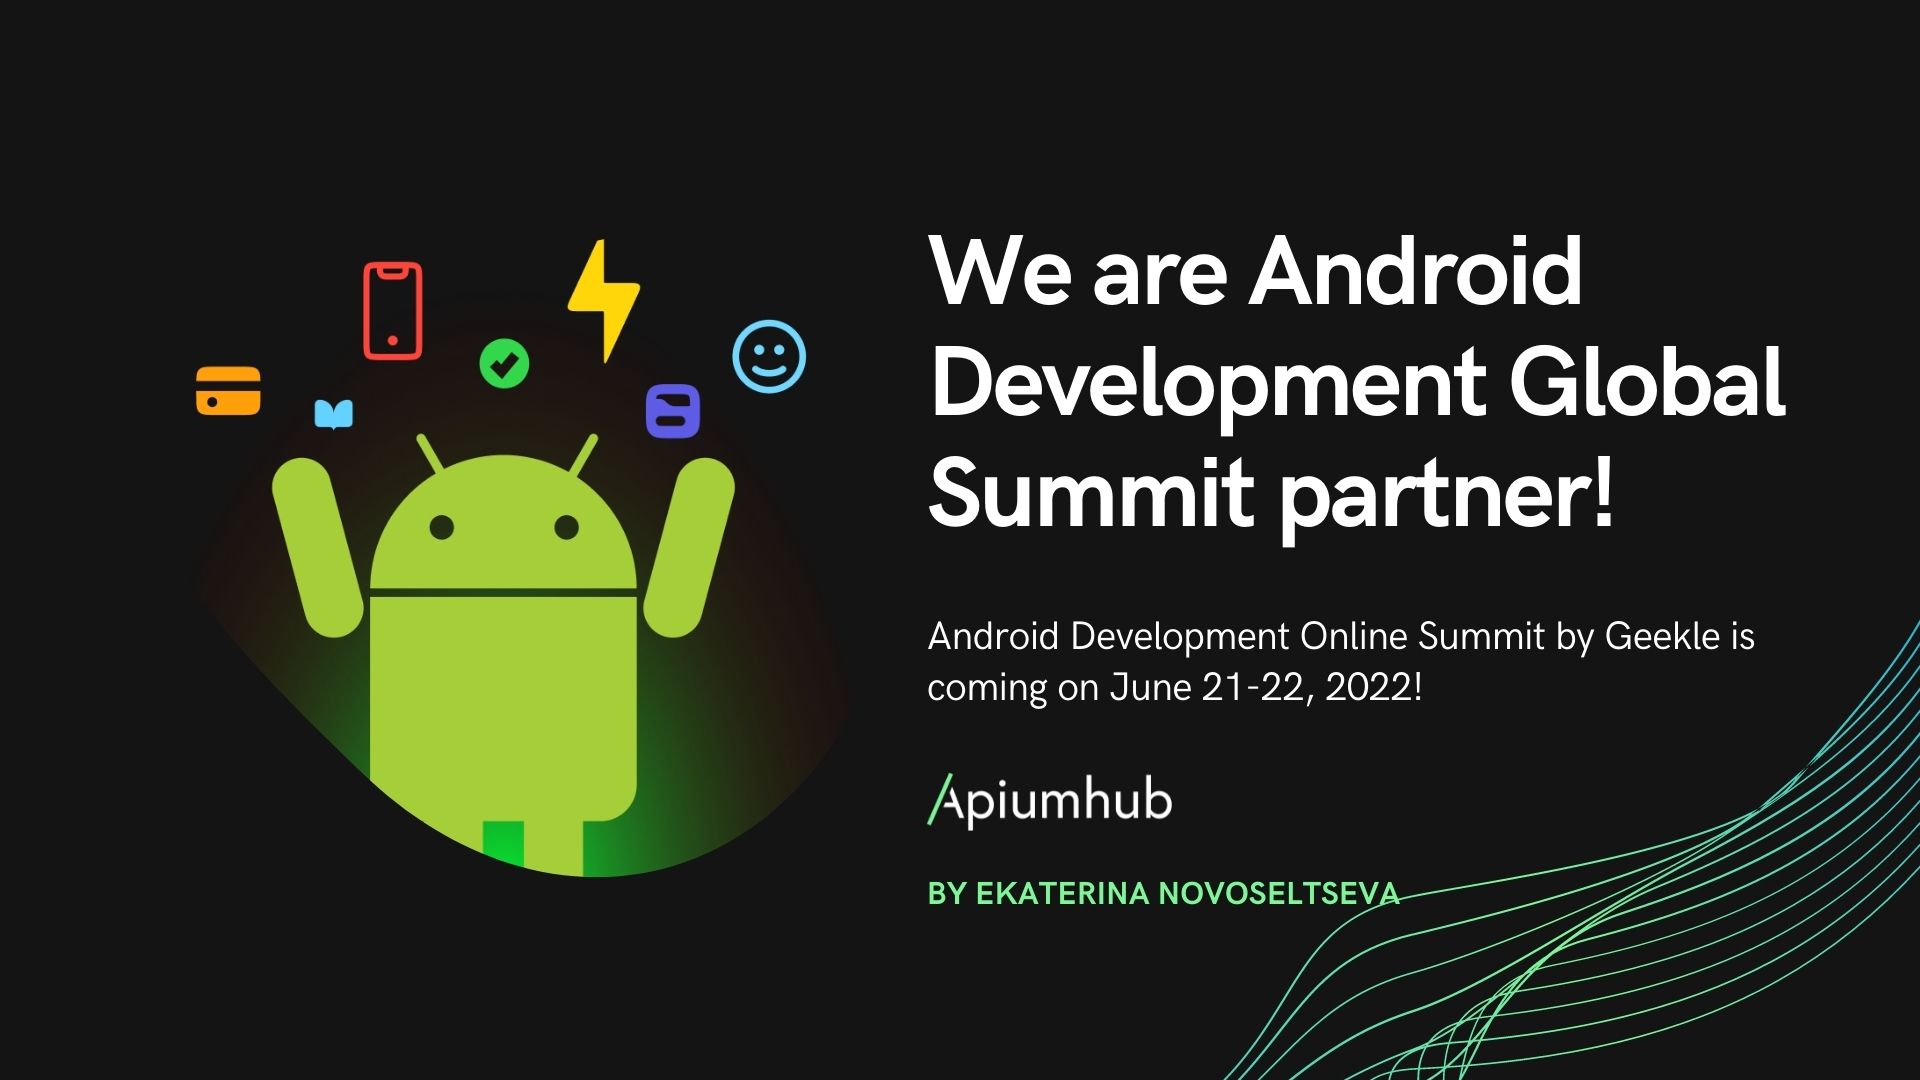 Apiumhub becomes Android Development Global Summit partner!